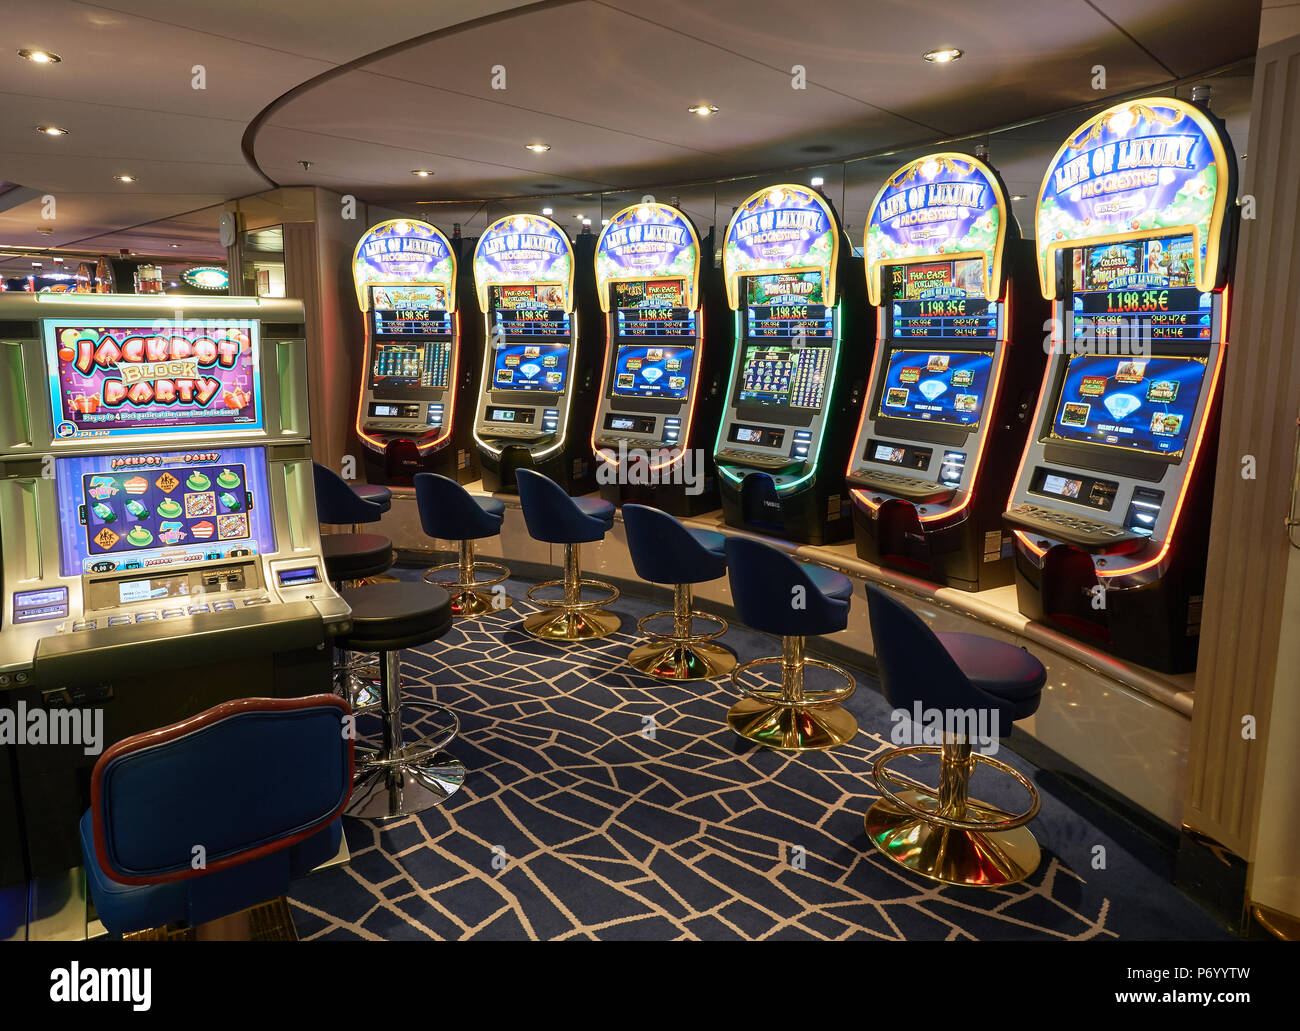 Cruise liner Opera of MSC - June 2016: Slot machines in gambling casino on board Stock Photo